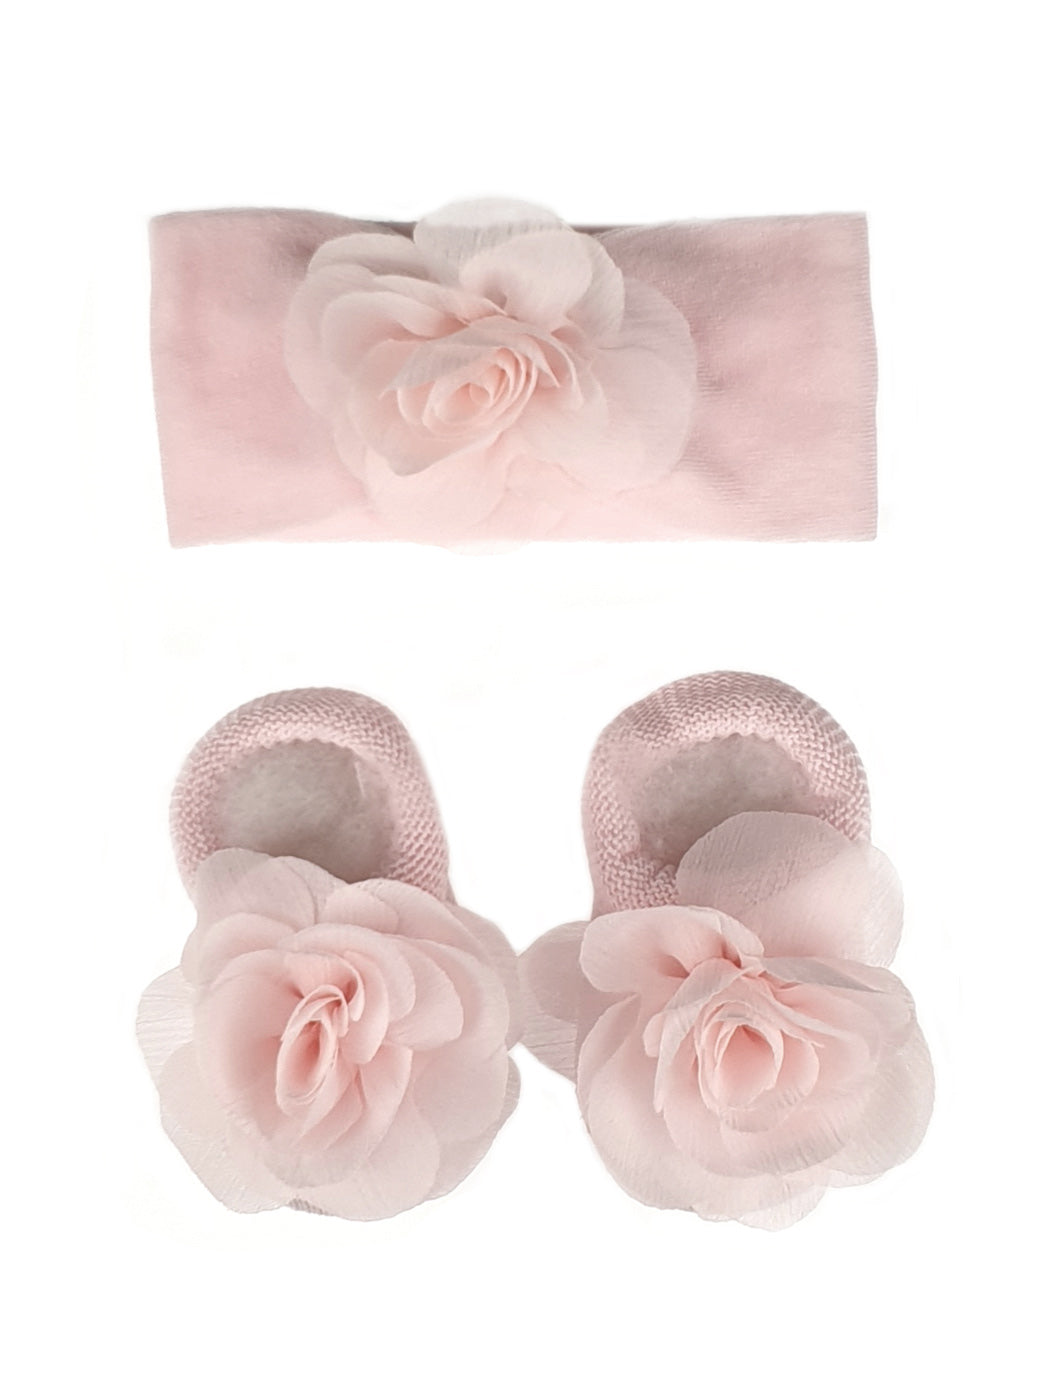 STORY LORIS - Pink Booties & Headband set for baby-21171